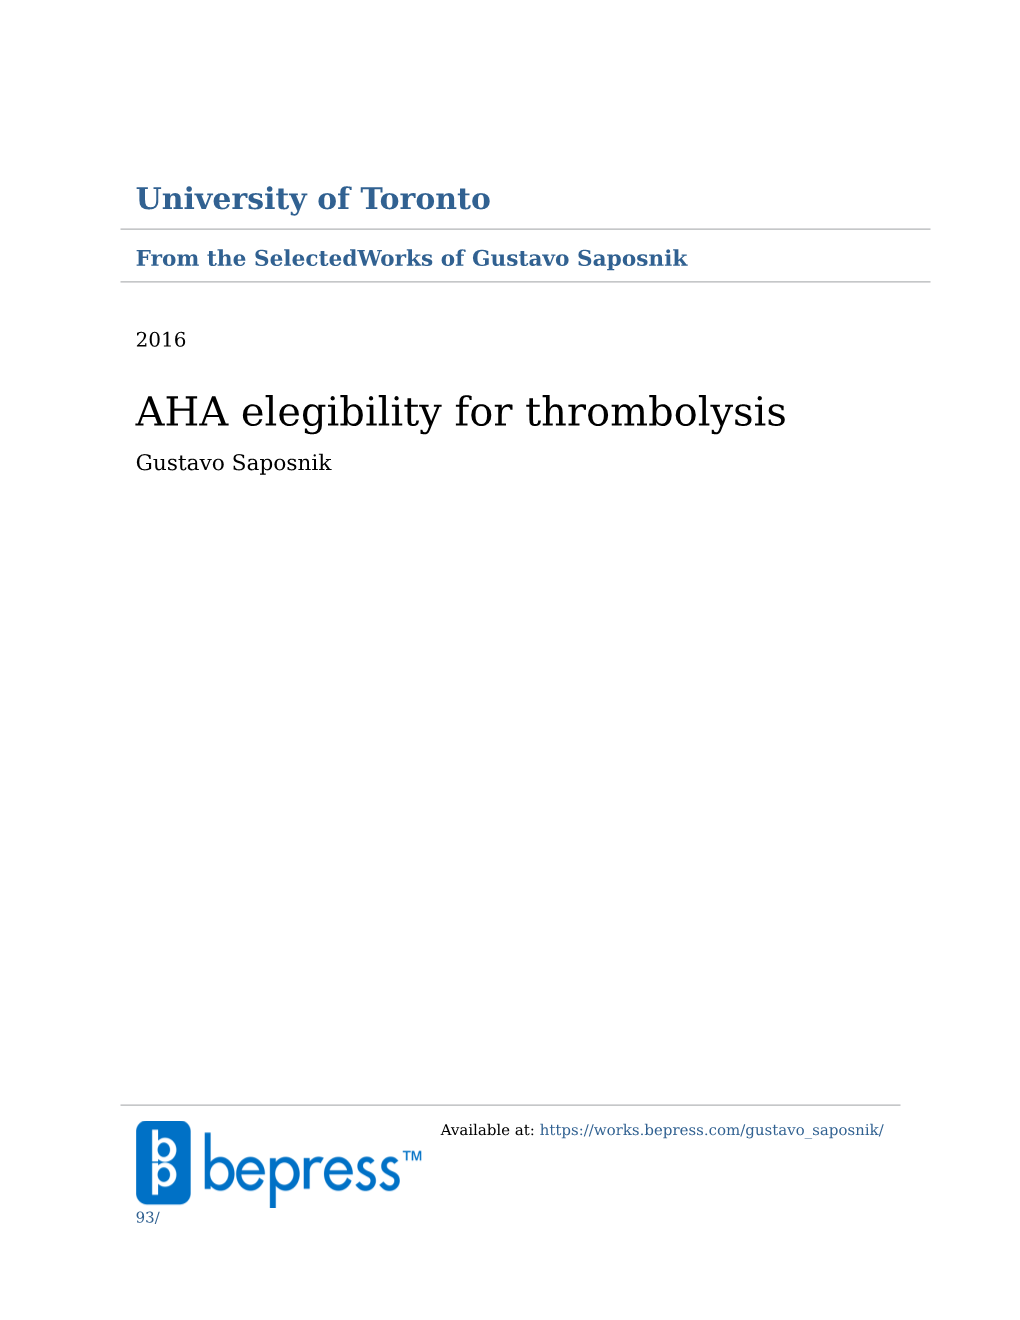 AHA Elegibility for Thrombolysis Gustavo Saposnik